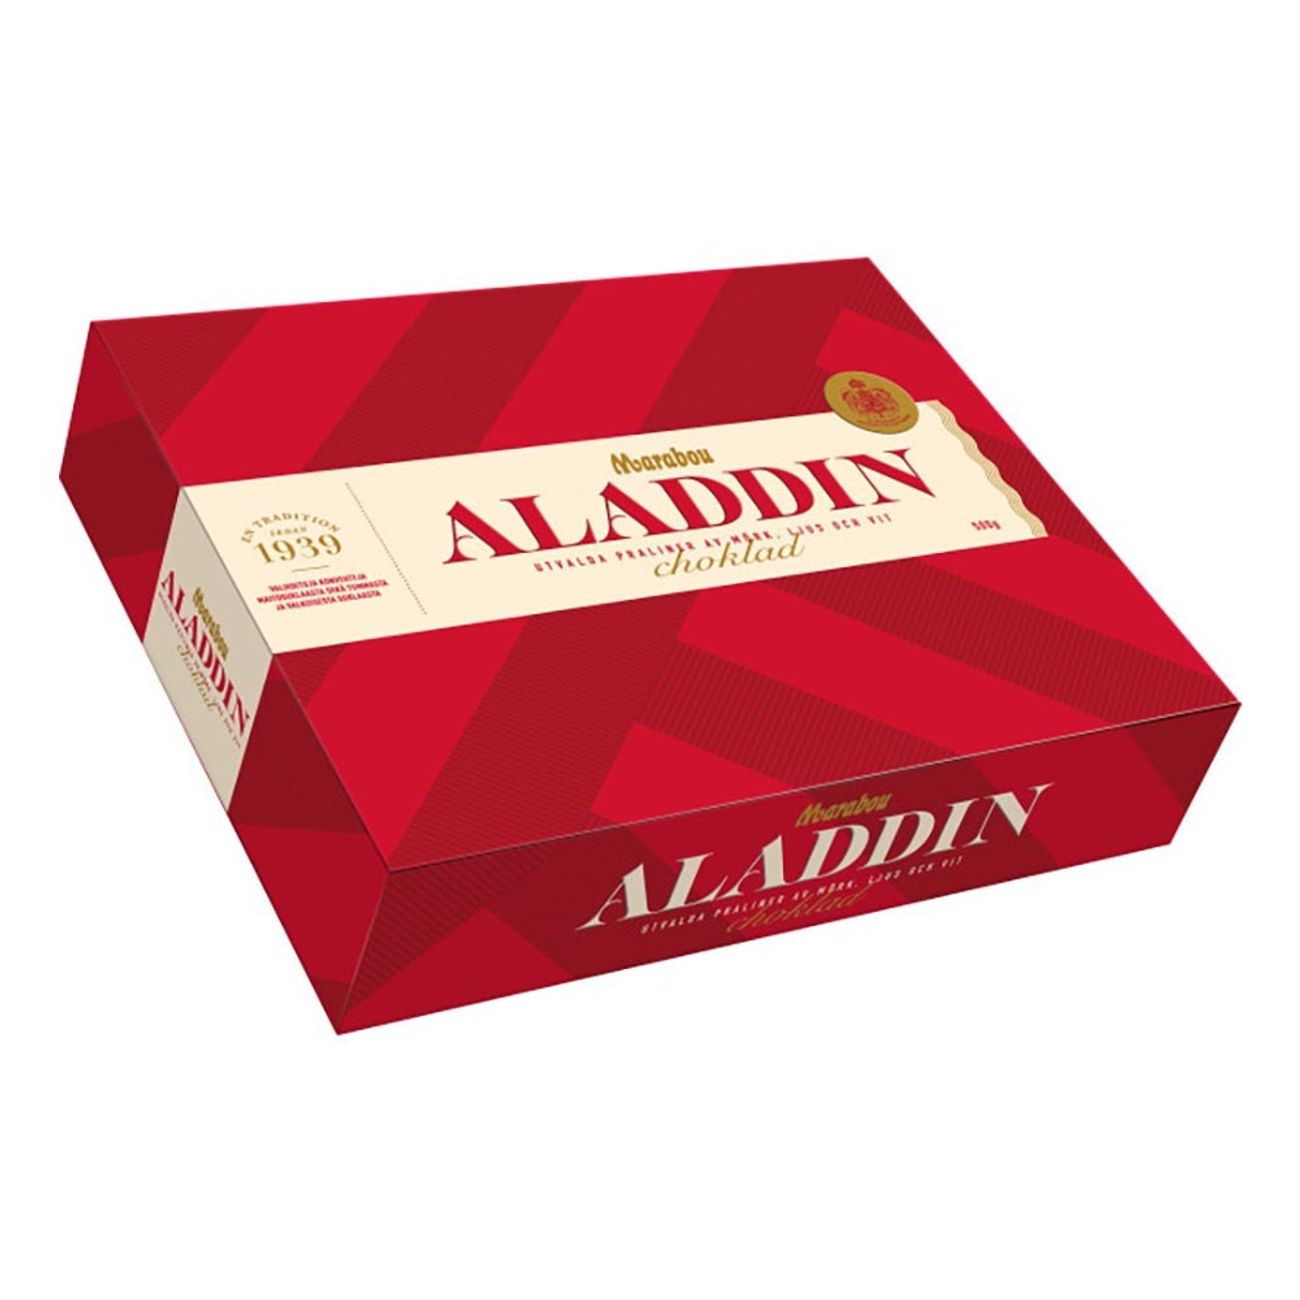 aladdin-500g-krt-21staa-92718-1